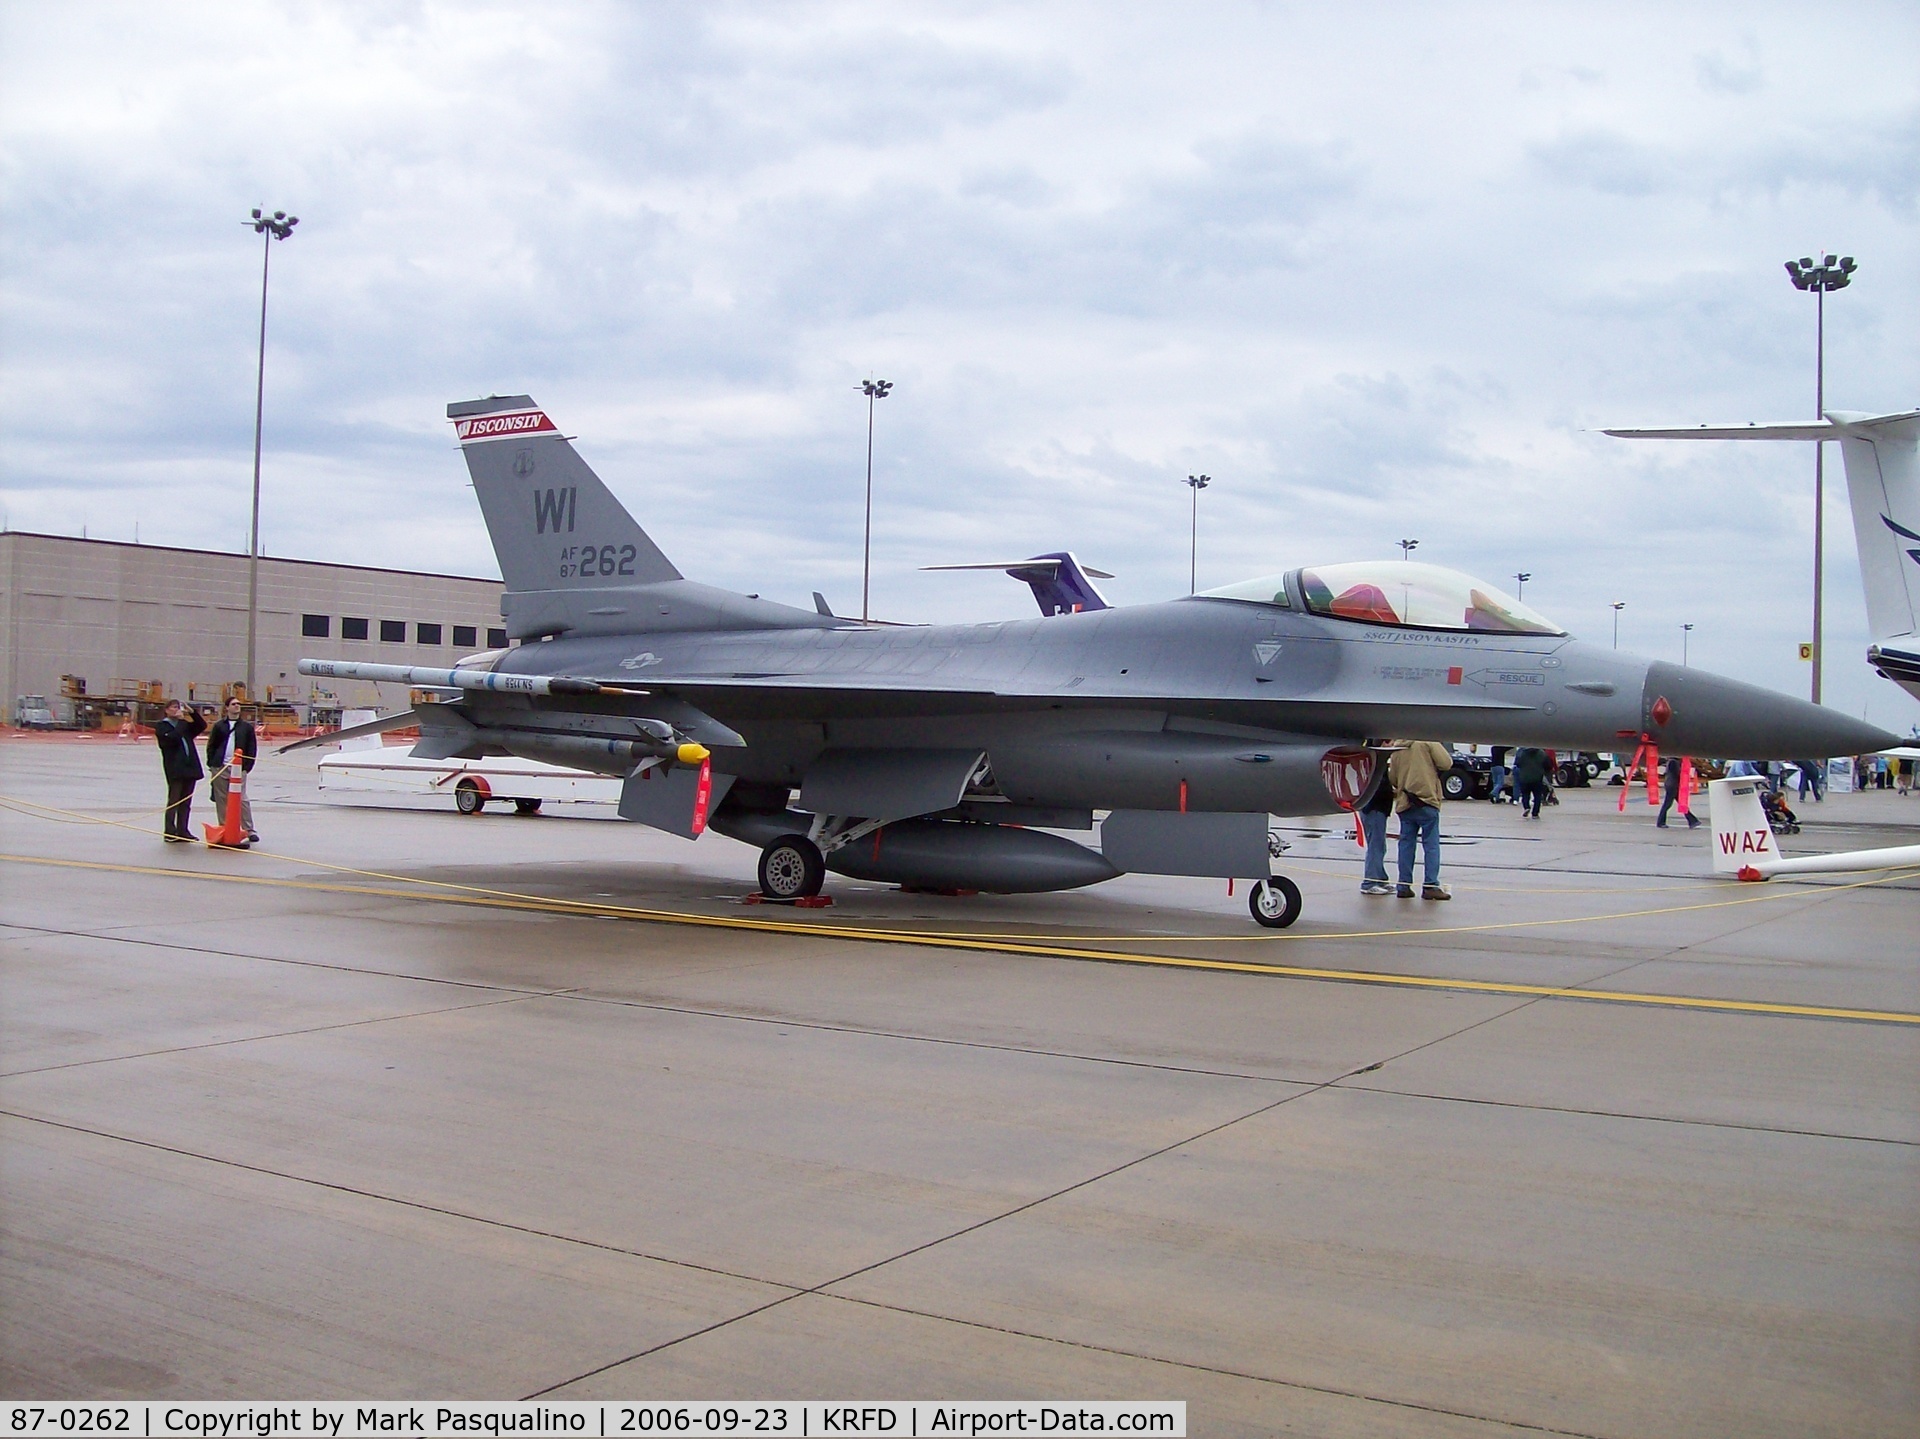 87-0262, 1987 General Dynamics F-16C Fighting Falcon C/N 5C-523, F-16